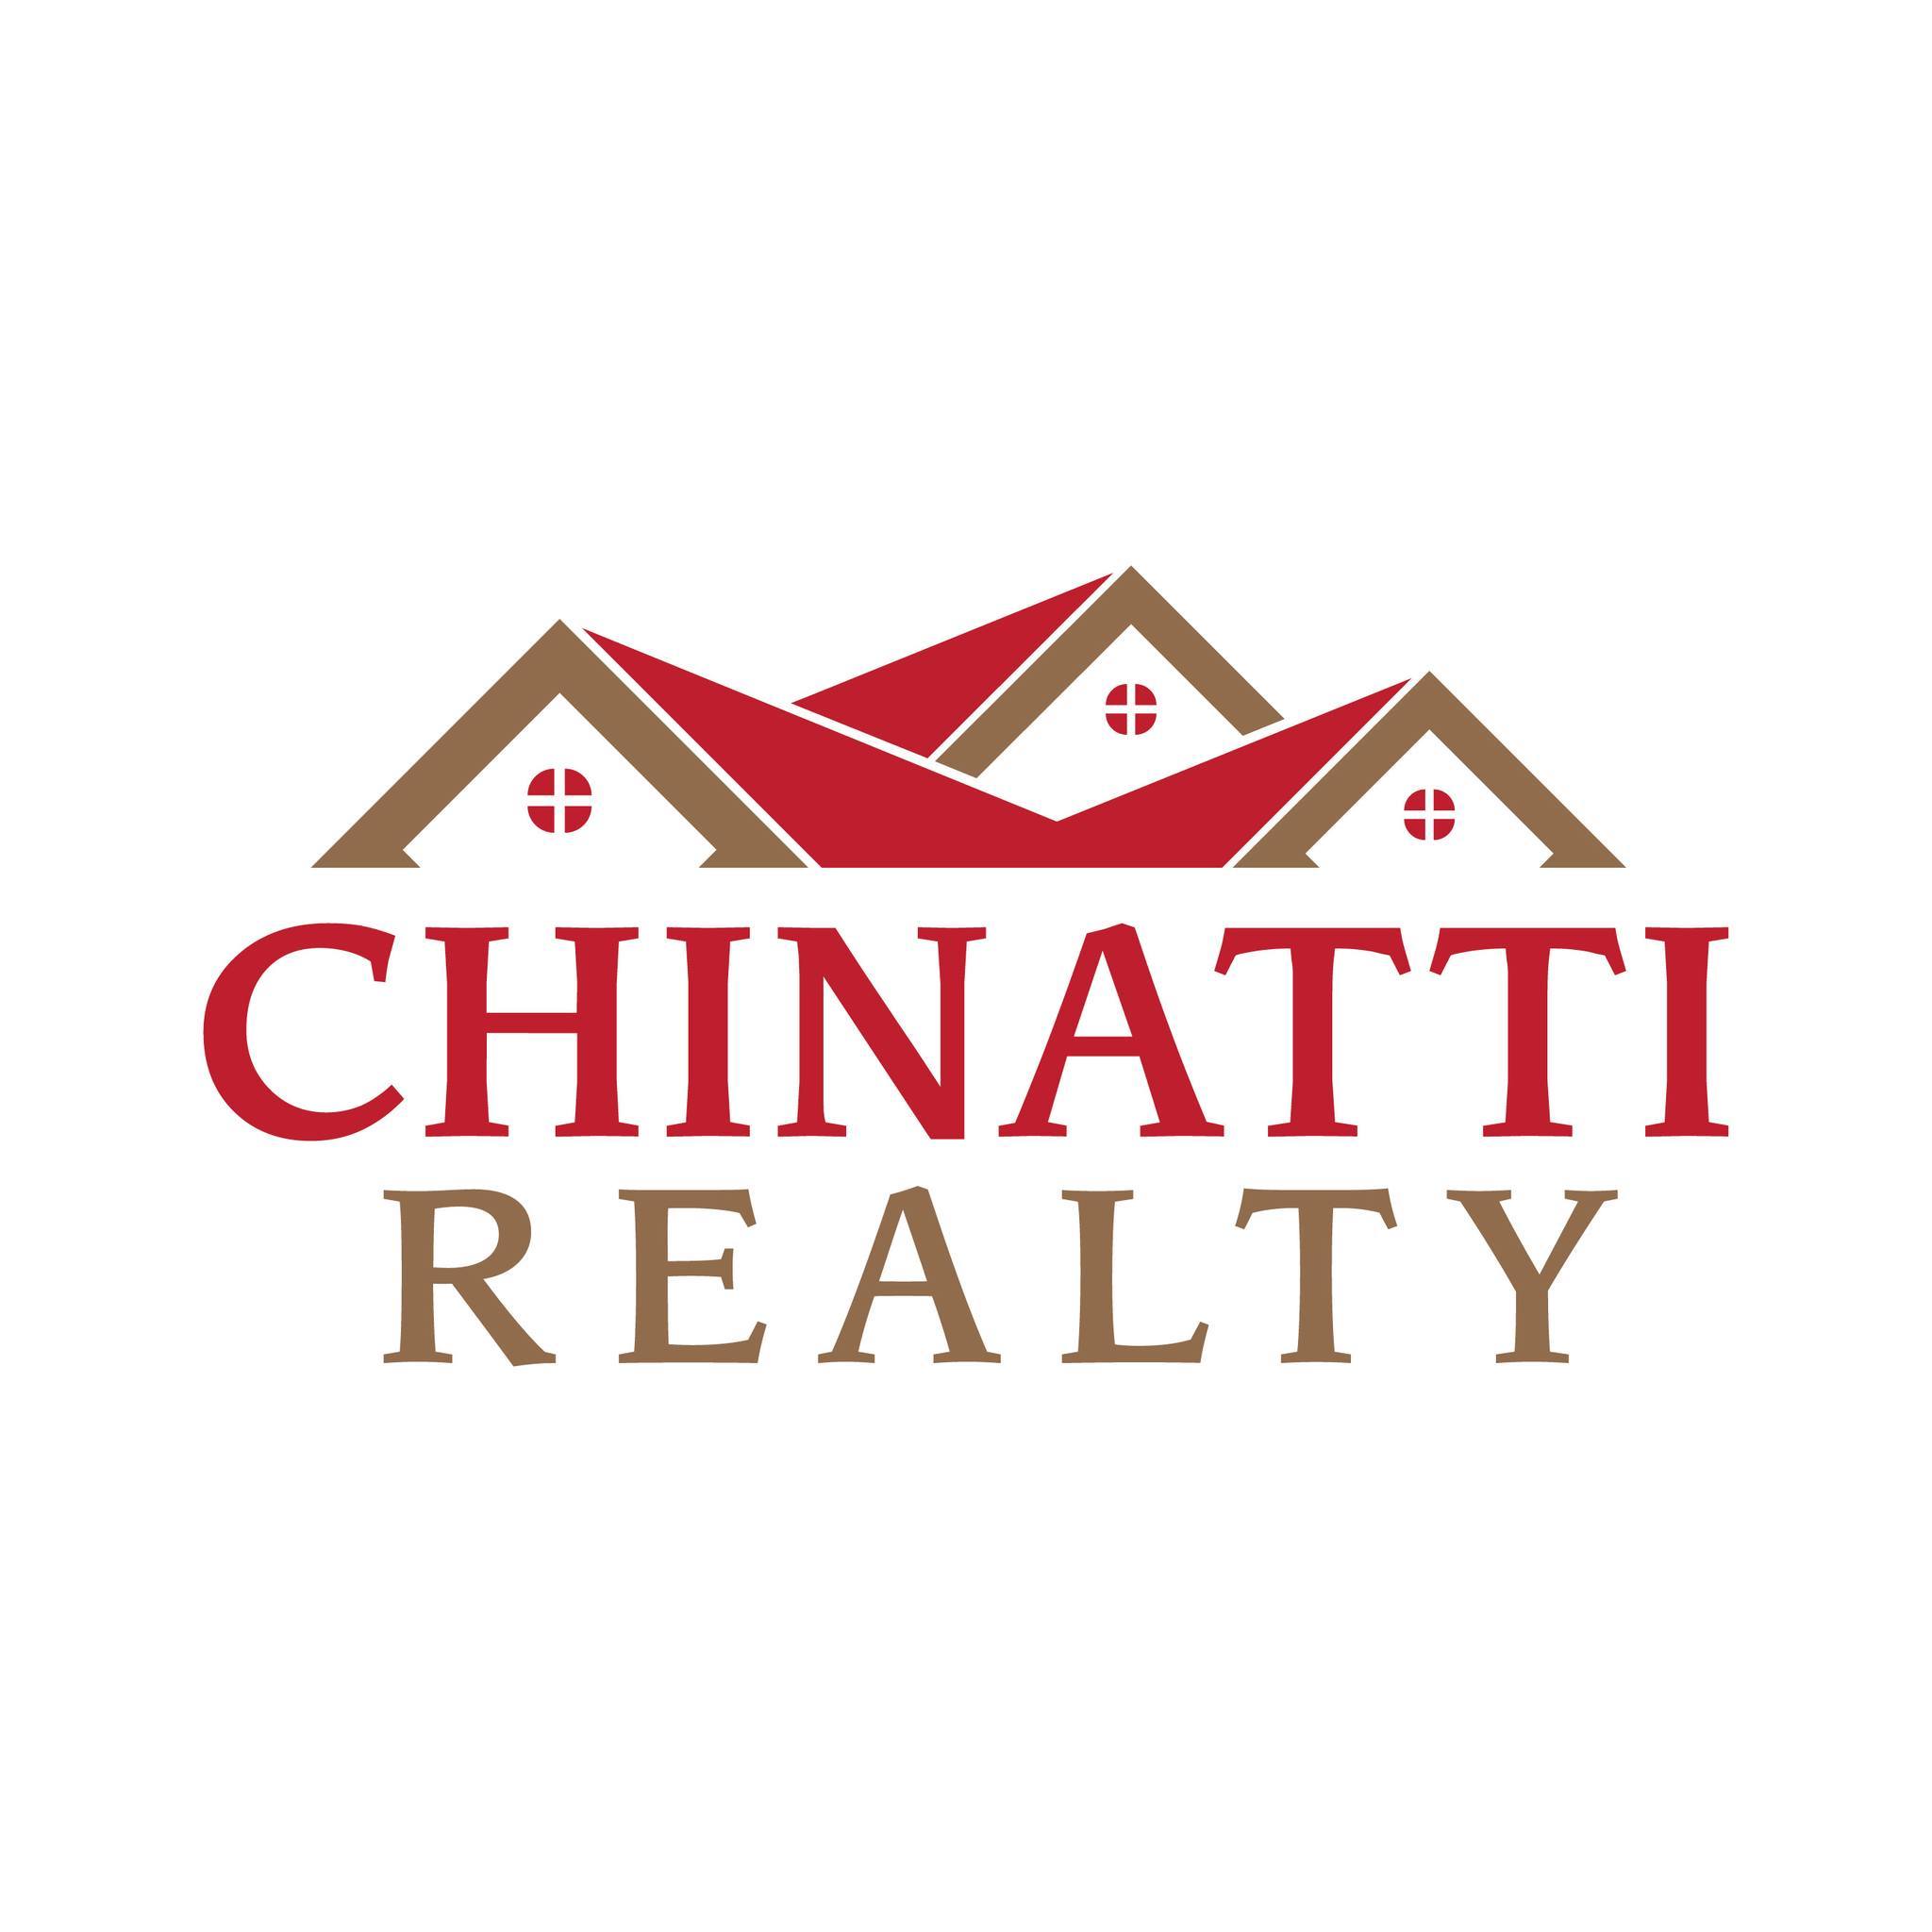 Chinatti Realty Group